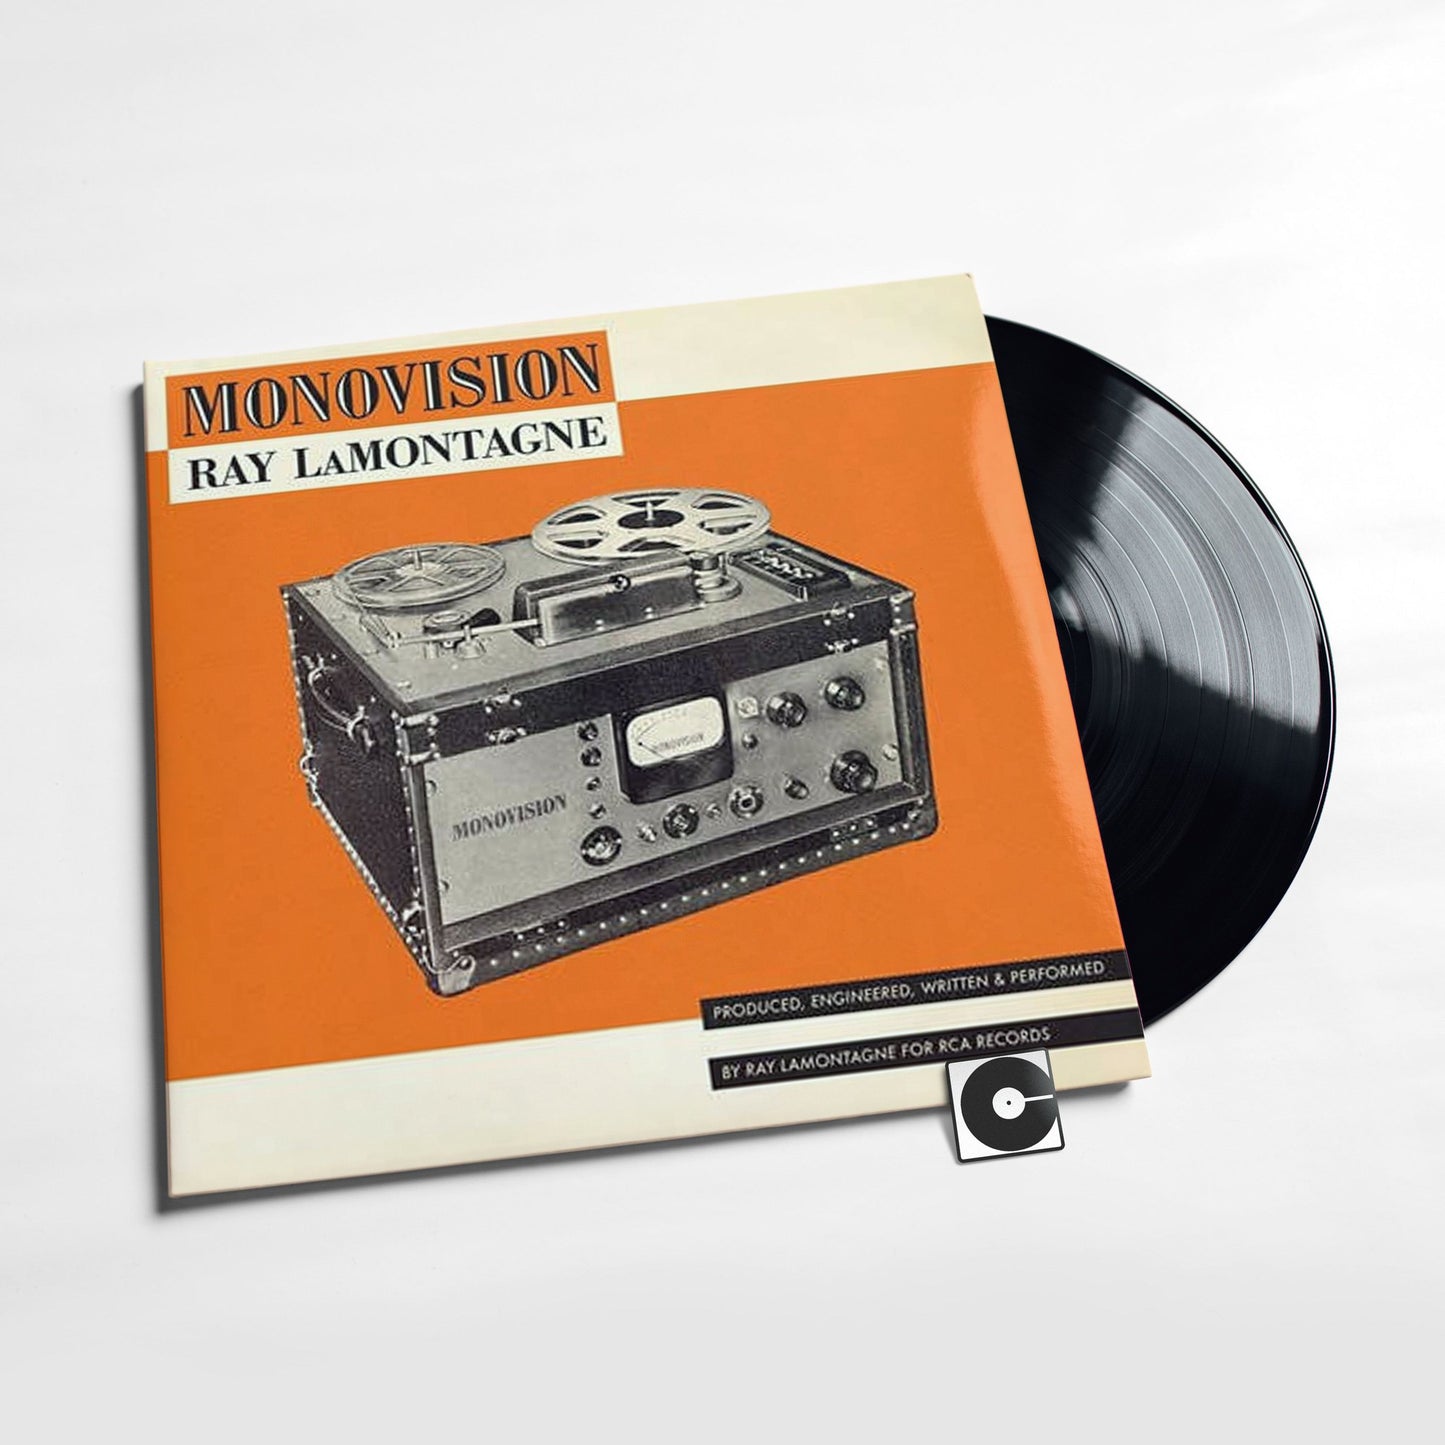 Ray LaMontagne - "Monovision"